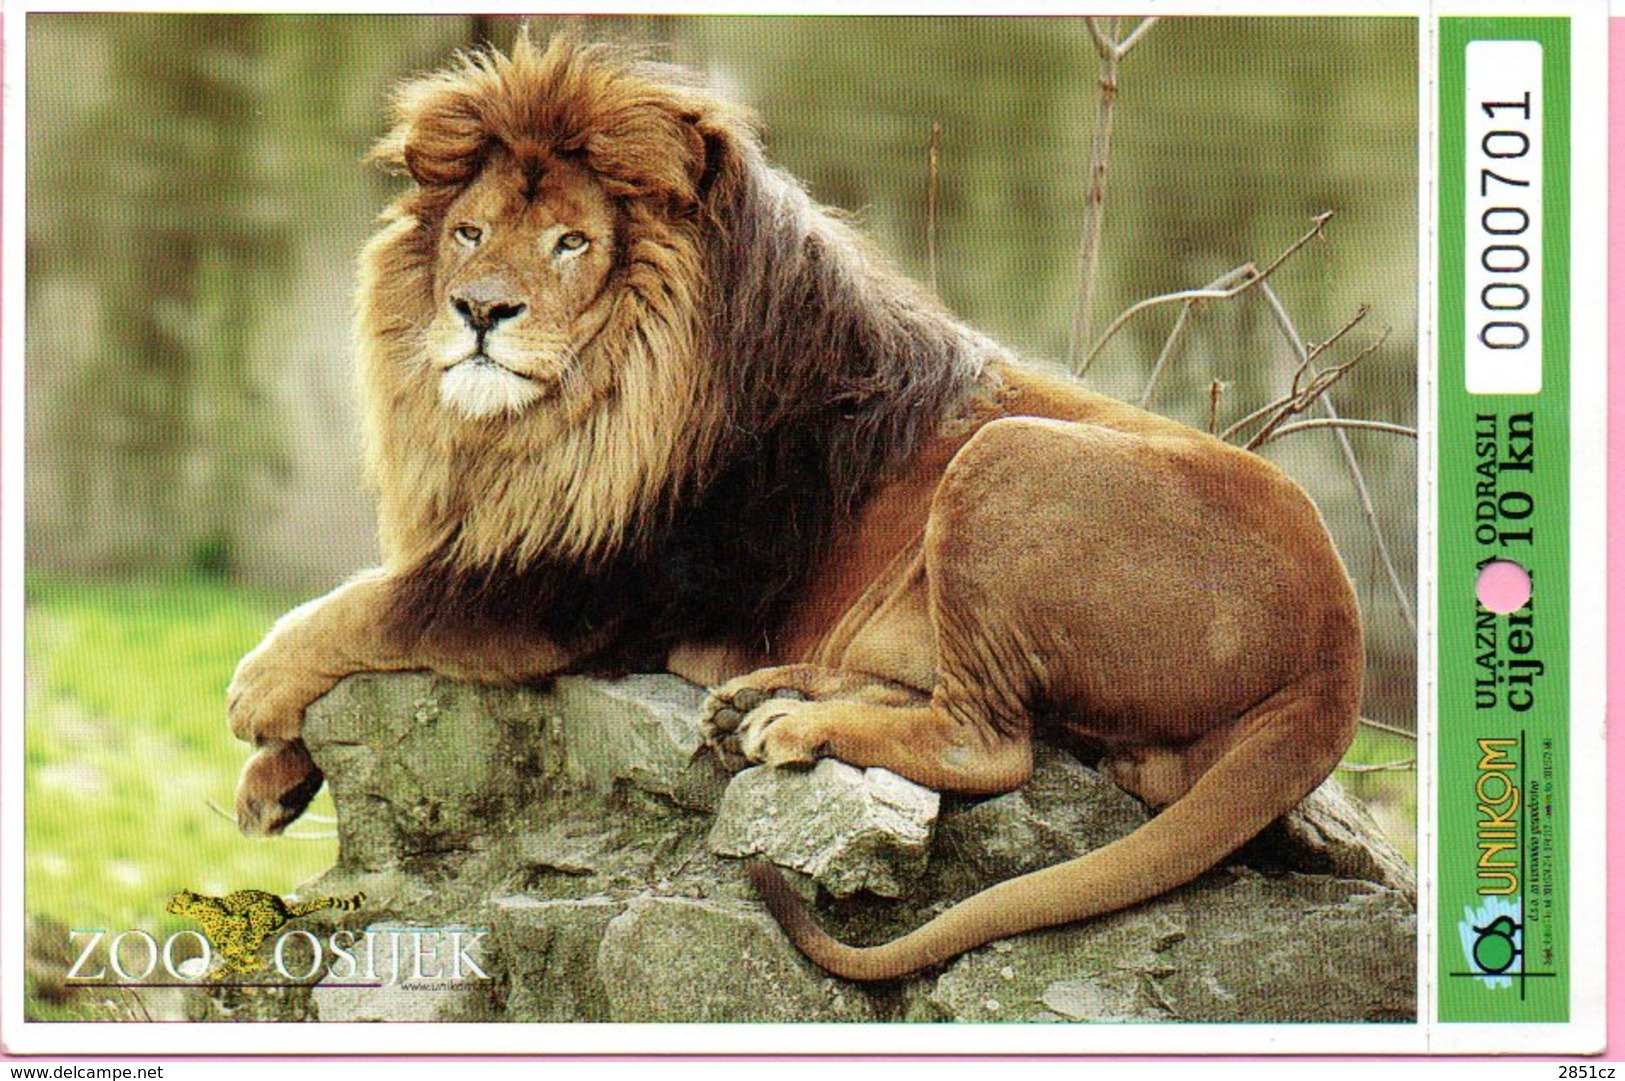 Ticket / Postcard - ZOO Garden - Panthera Leo - Lion, Osijek, Croatia - Tickets - Entradas